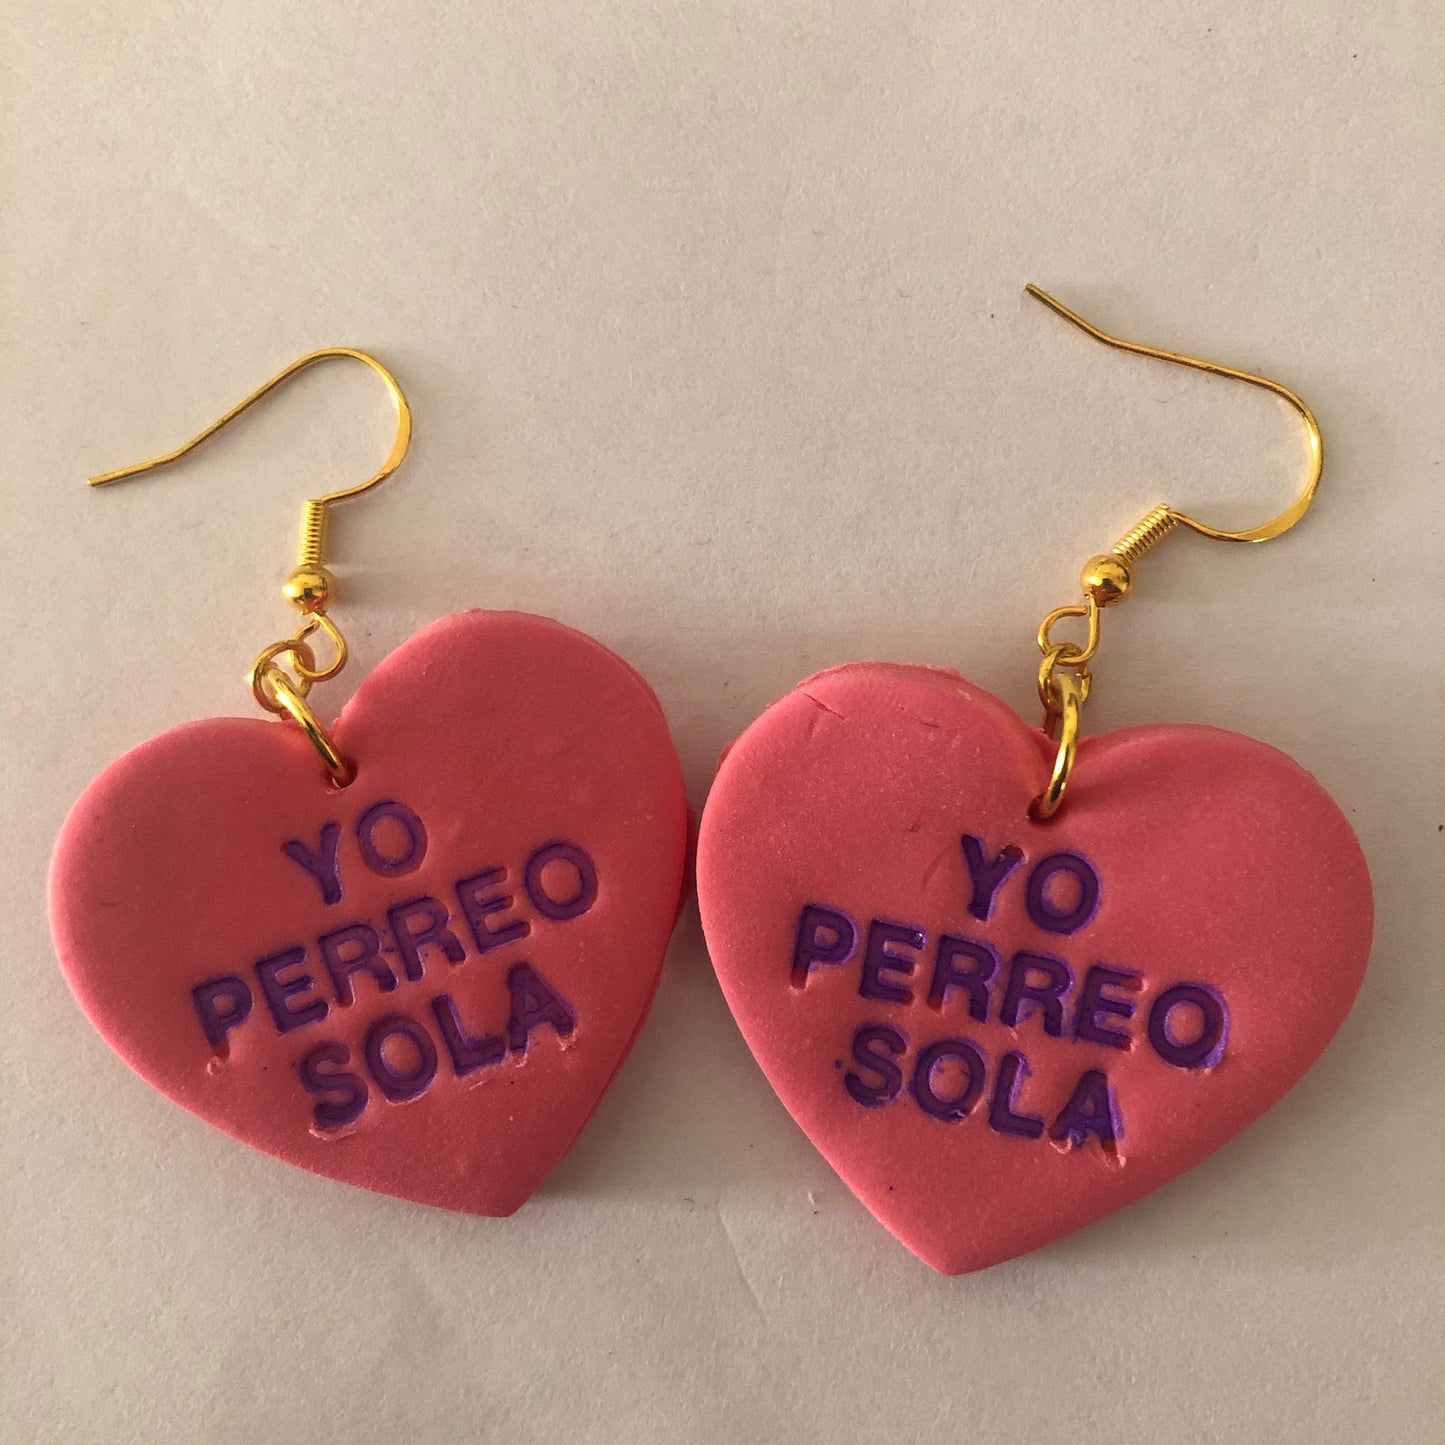 Yo perreo sola polymer clay heart-shaped earrings